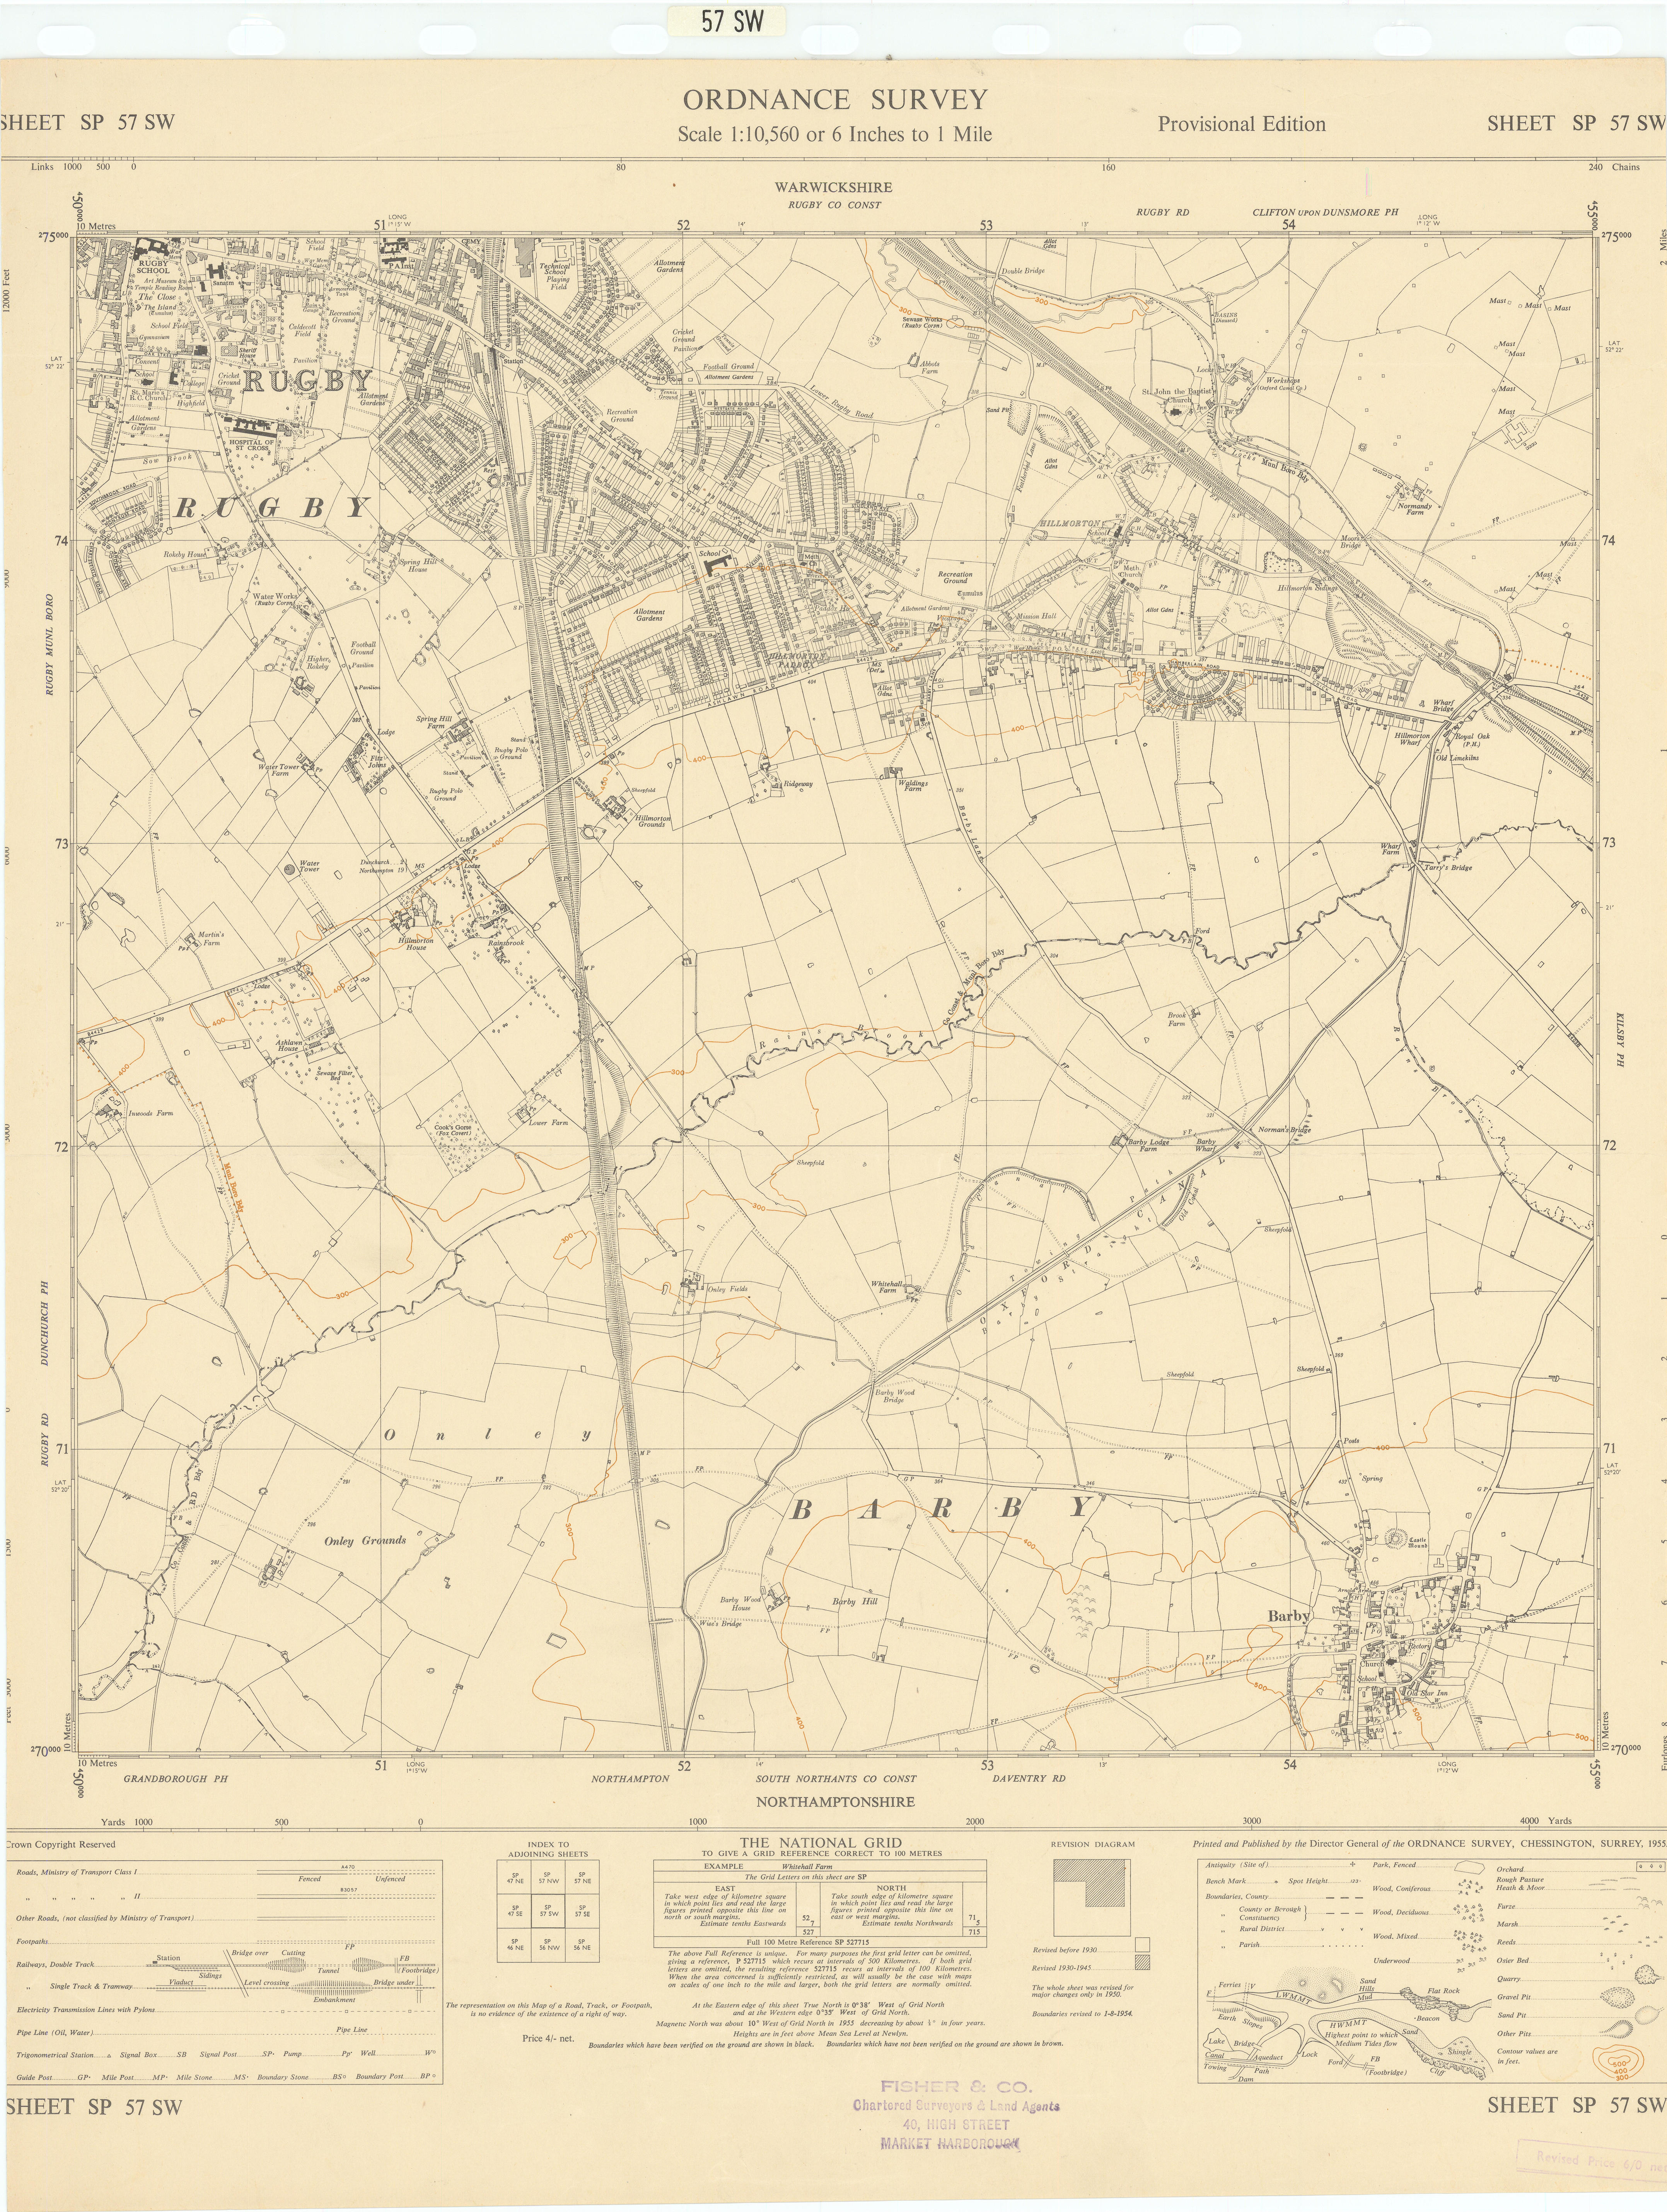 Ordnance Survey Sheet SP57SW Warwickshire Rugby Hillmorton Barby 1955 old map